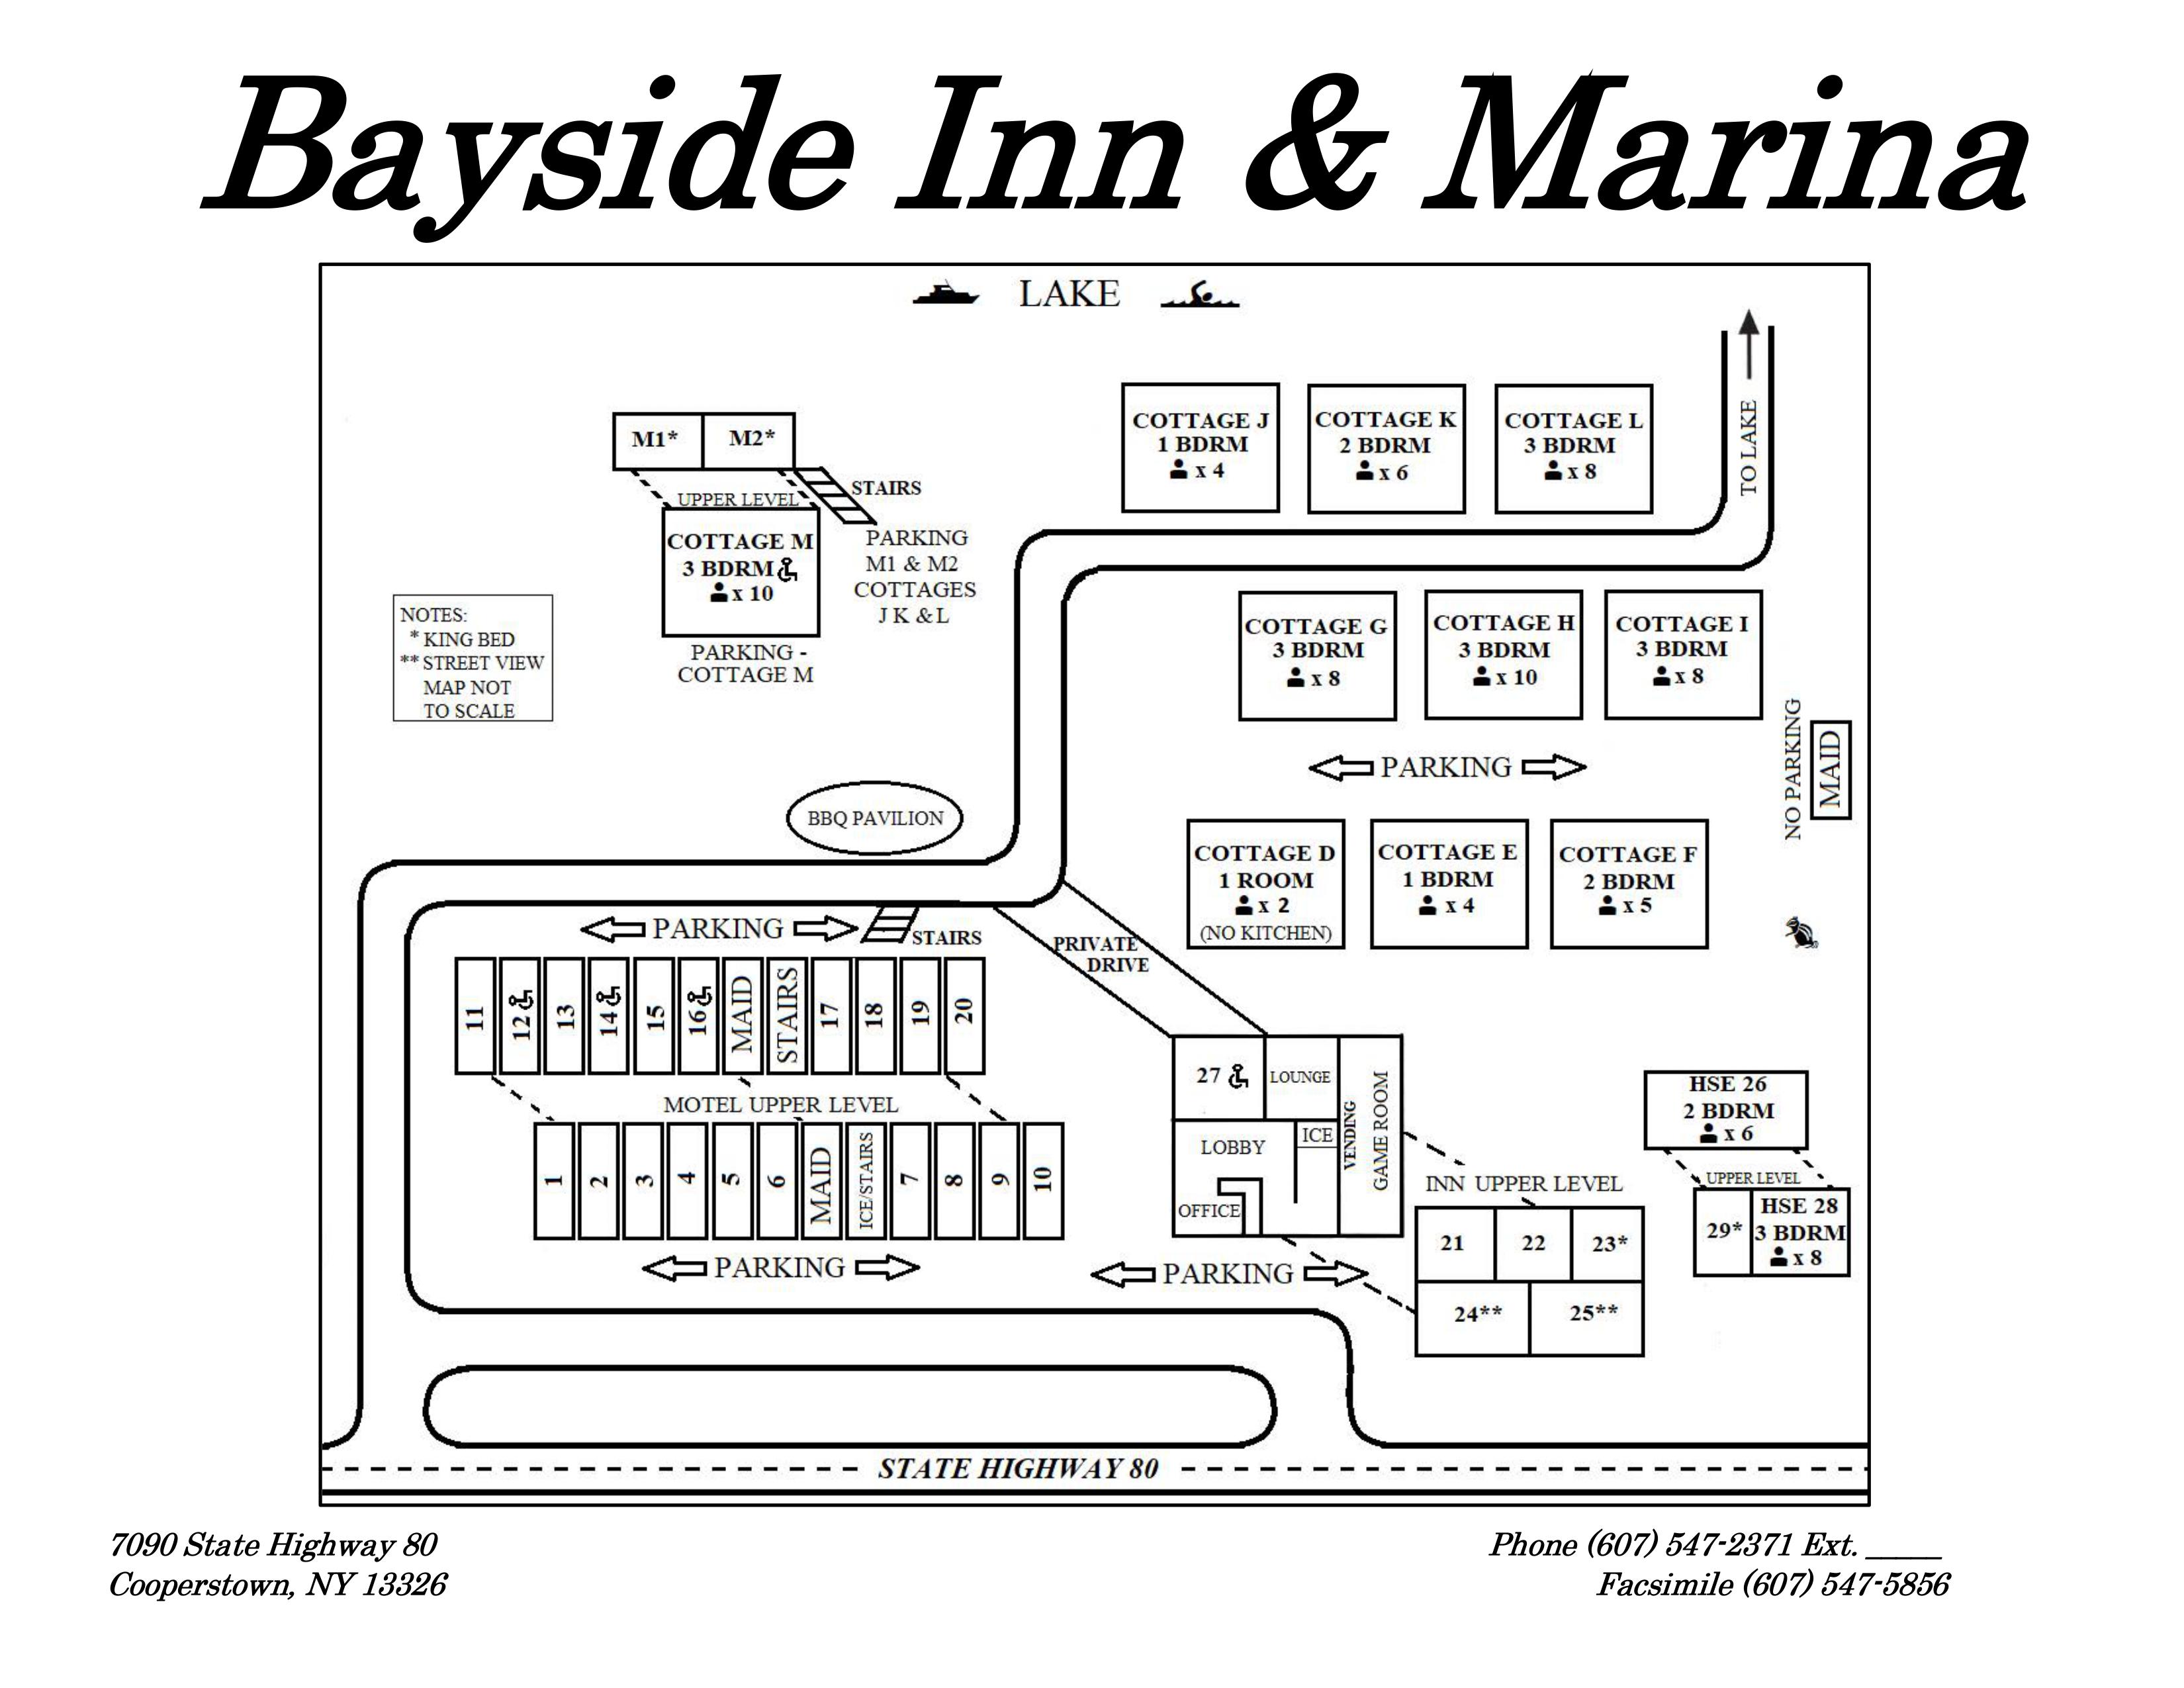 Bayside Inn and Marina